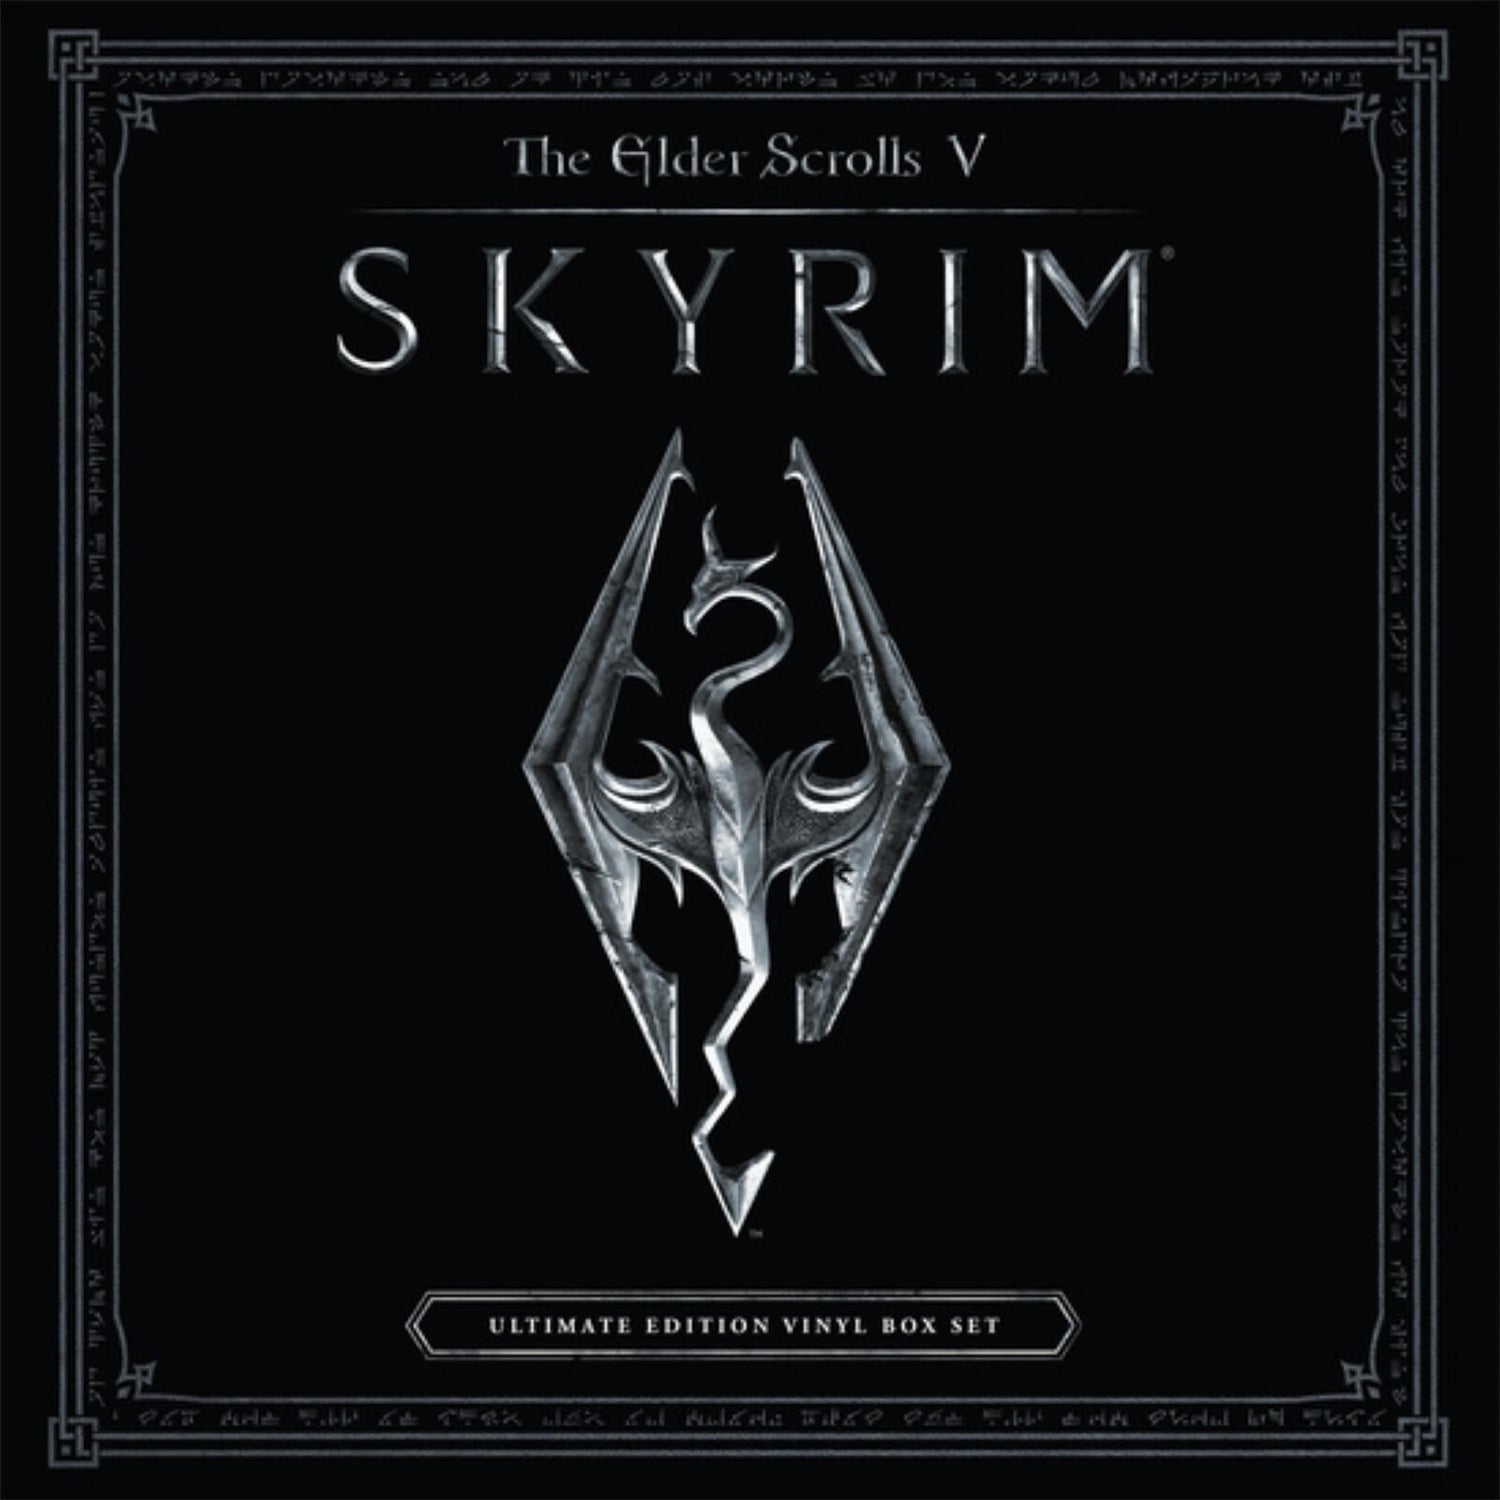 The Elder Scrolls V: Skyrim (Ultimate Edition) 4xLP Box Set